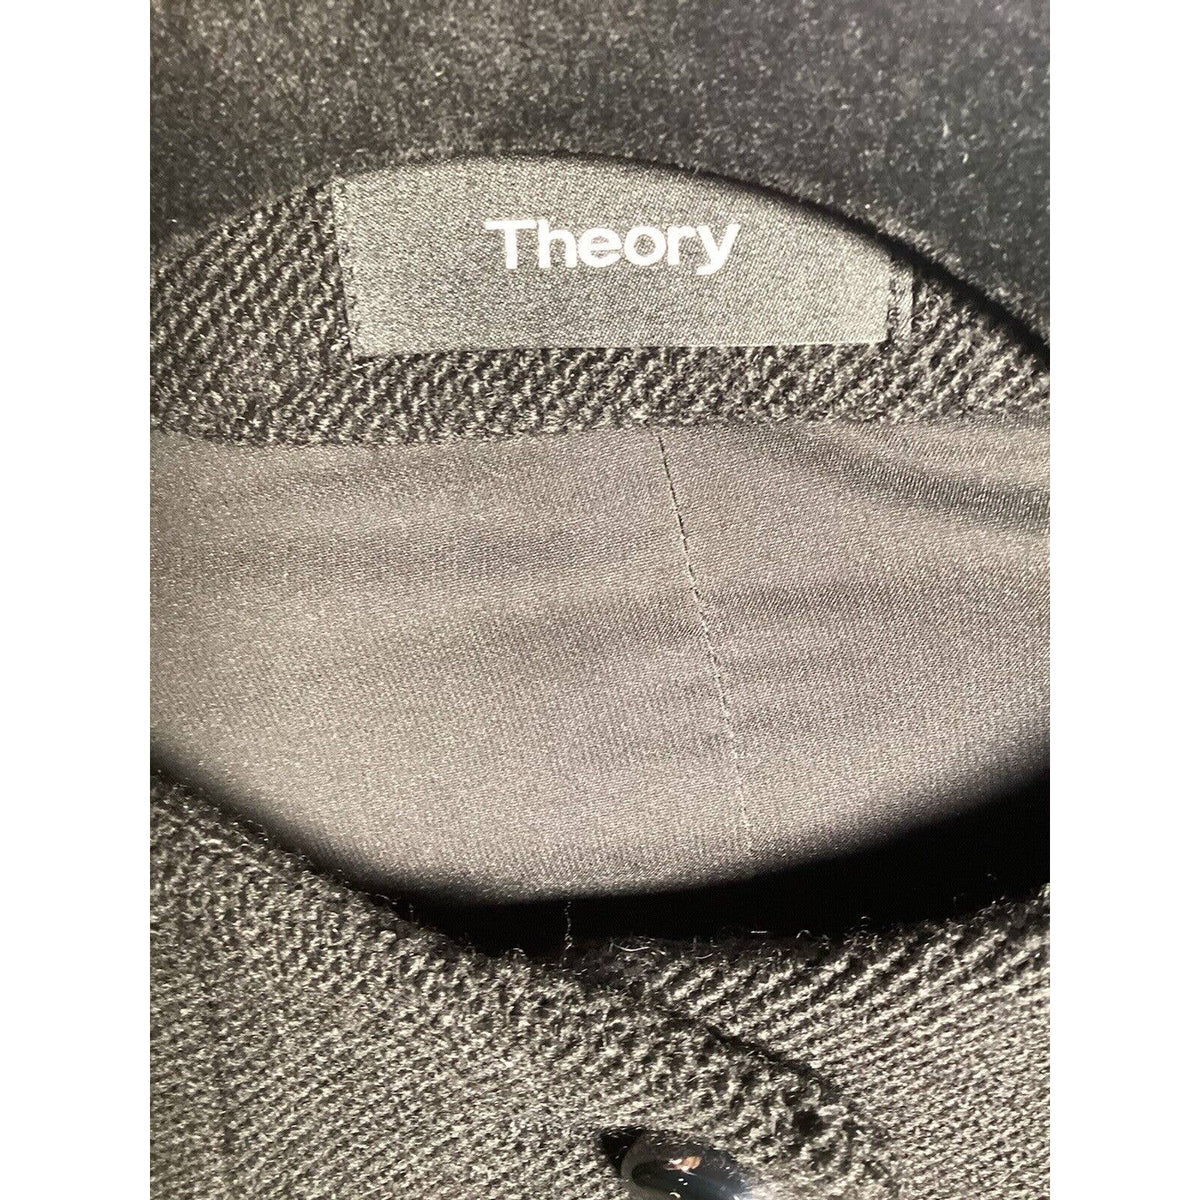 Theory Button Front Cutaway Black Stretch Jacket Sz.6